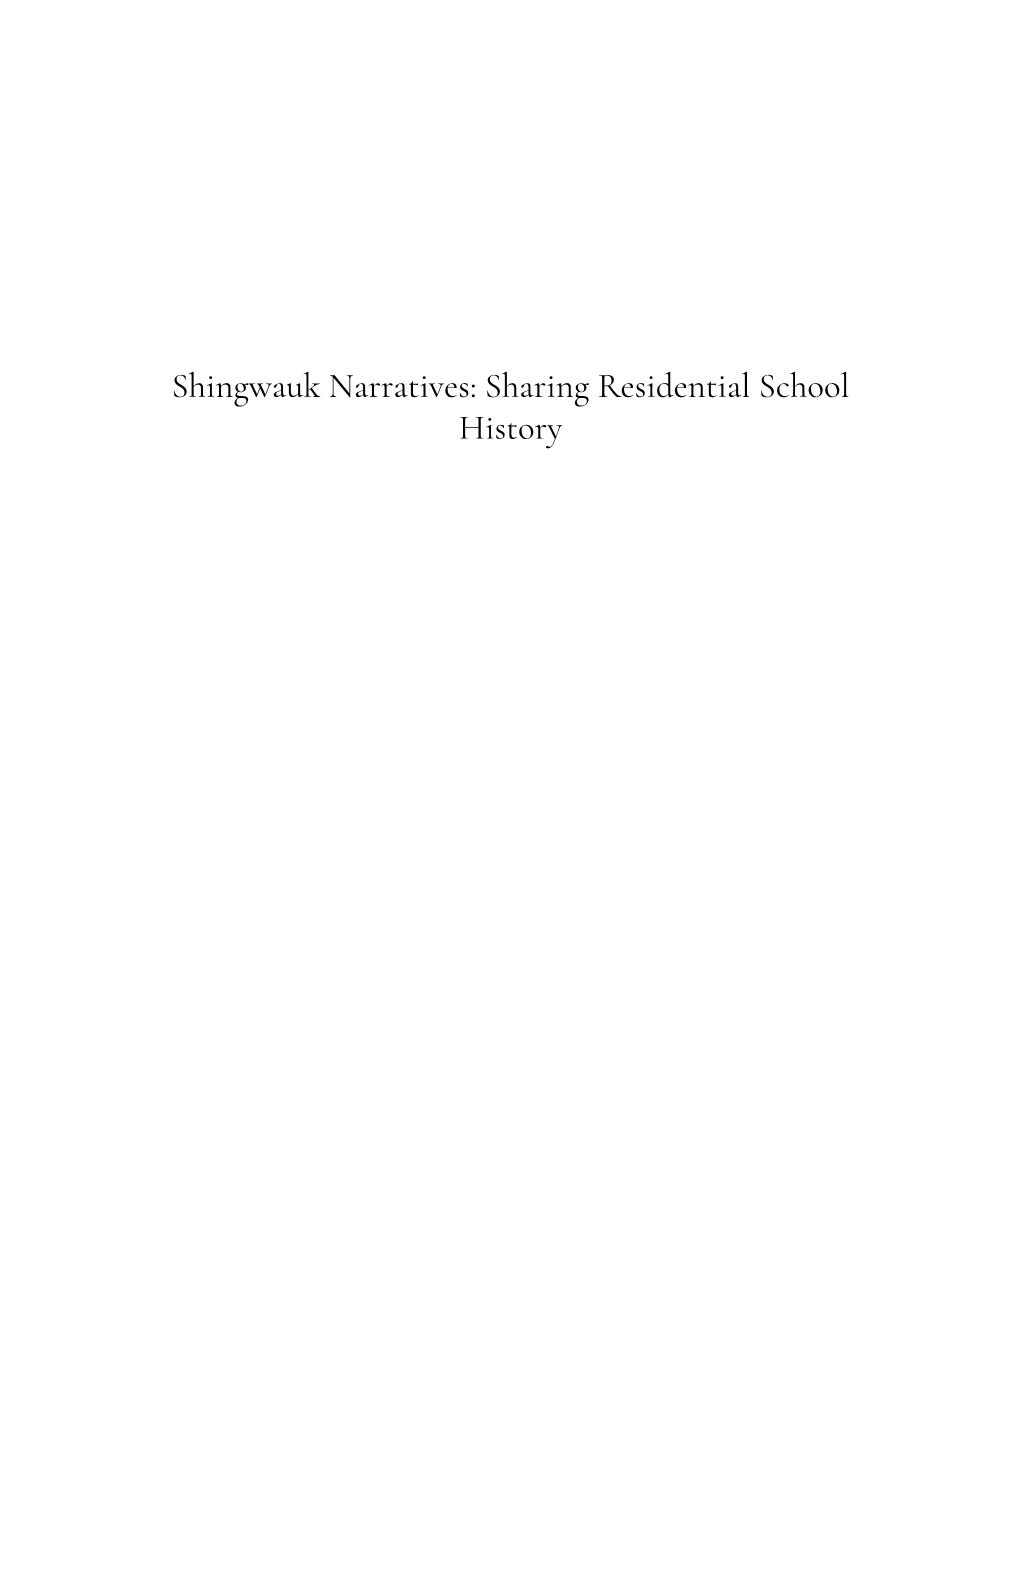 Shingwauk Narratives: Sharing Residential School History